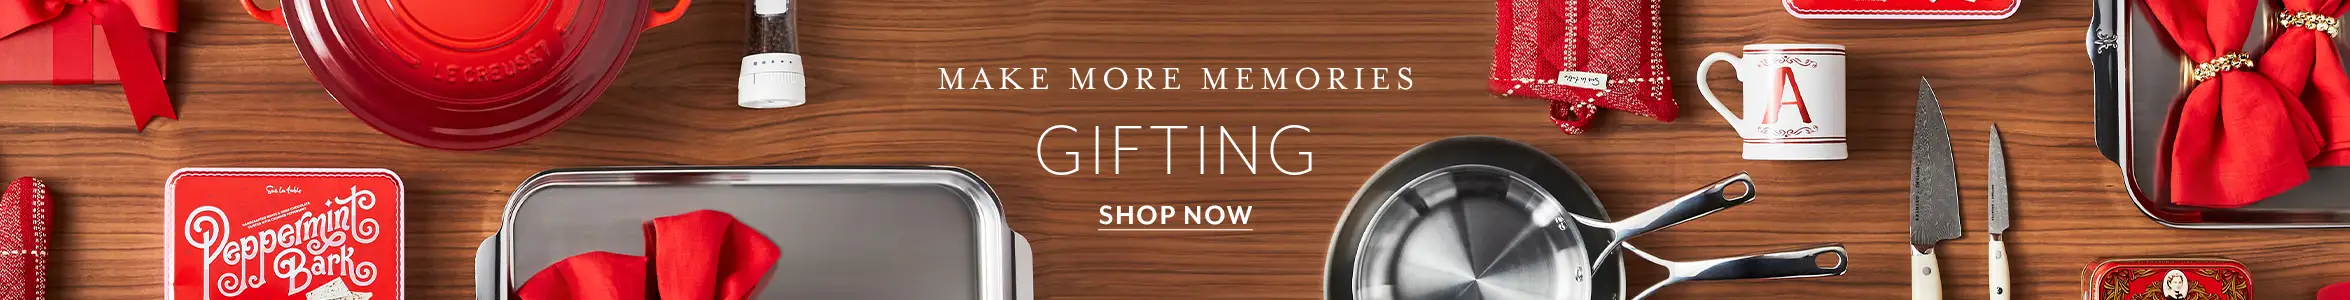 Make More Memories, holiday gifting, shop now.